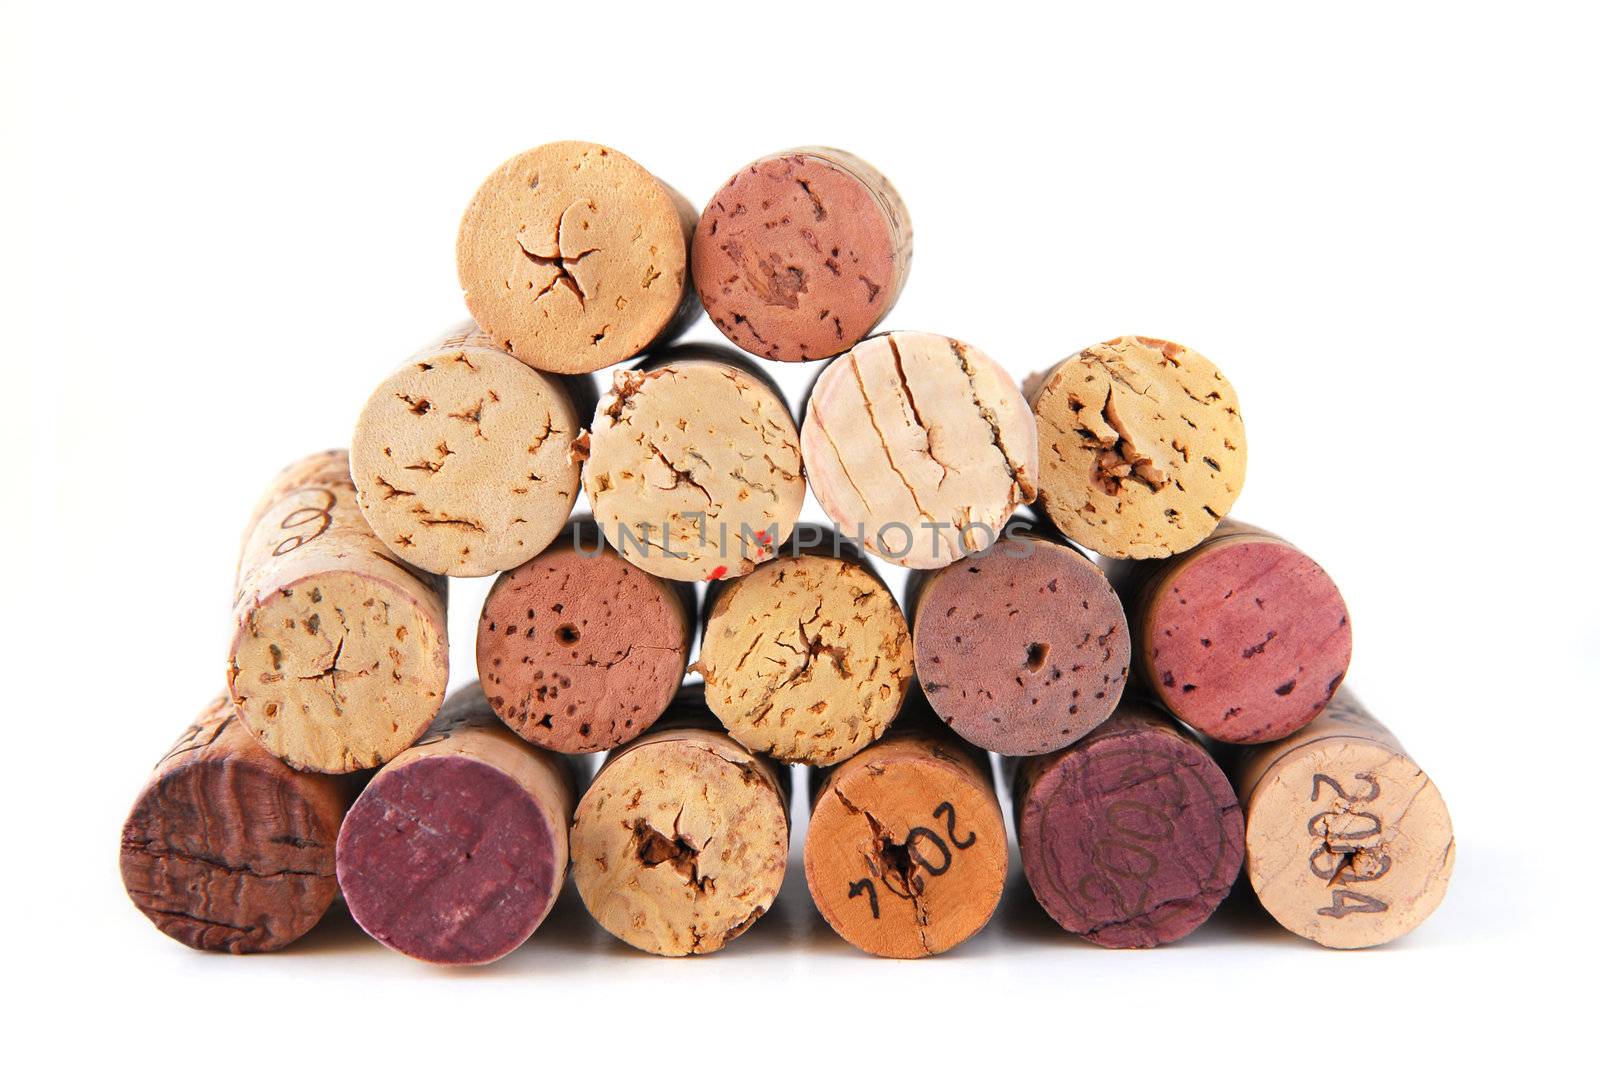 Wine corks by elenathewise